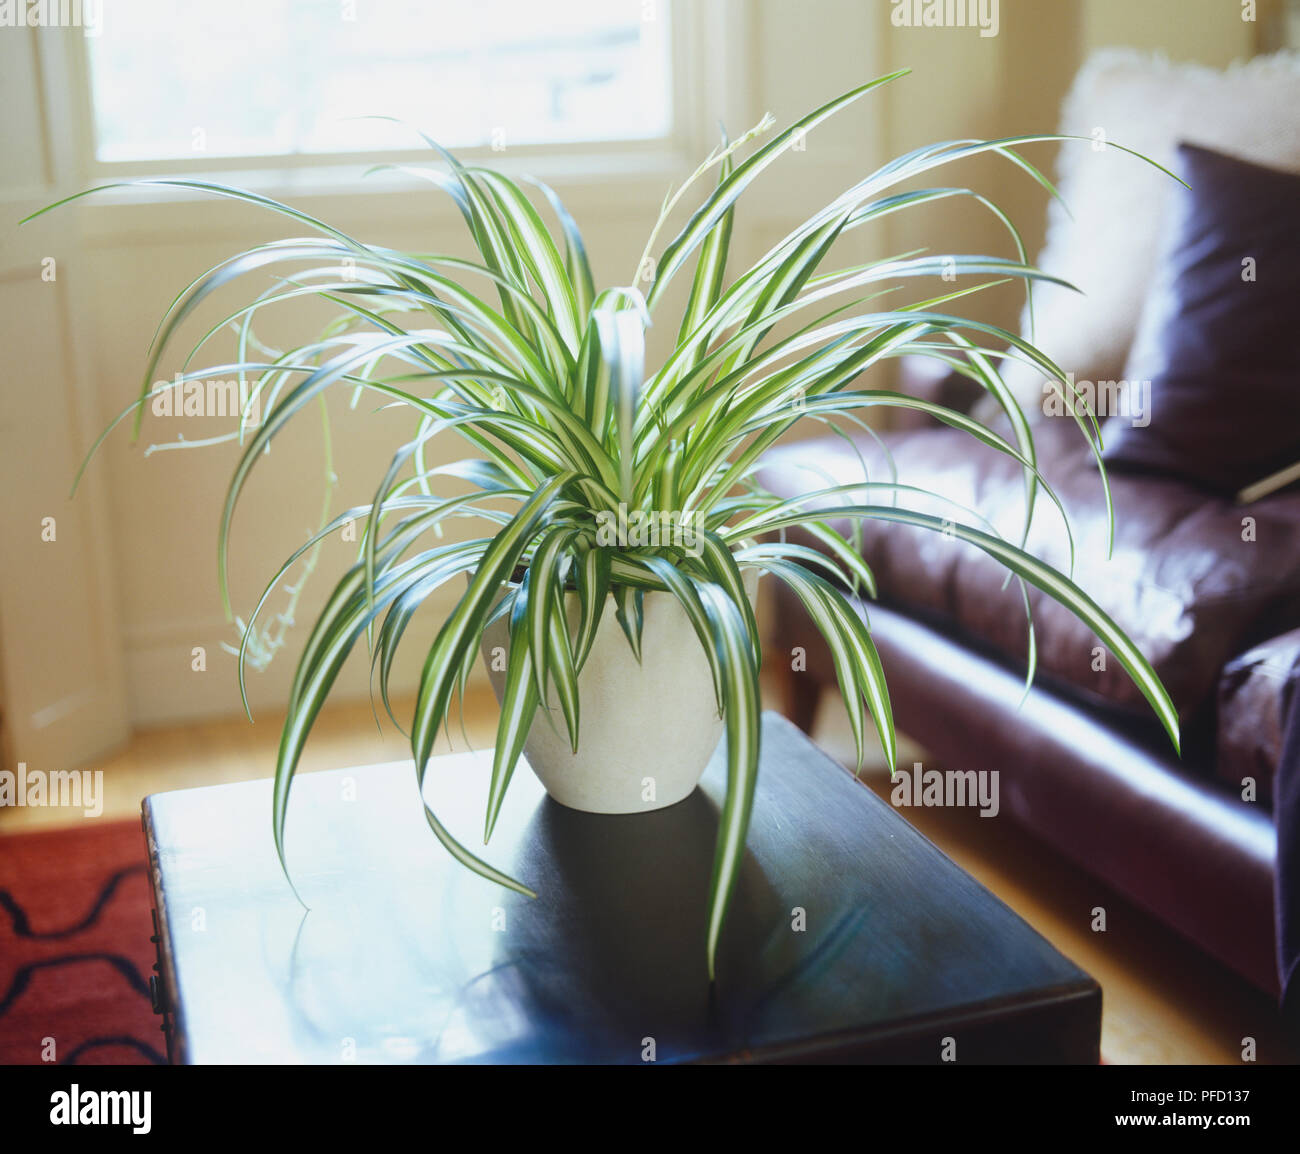 Chlorophytum Comosum Vittatum Spider Plant Growing In White Ceramic Pot Standing On Living Room Coffee Table Stock Photo Alamy